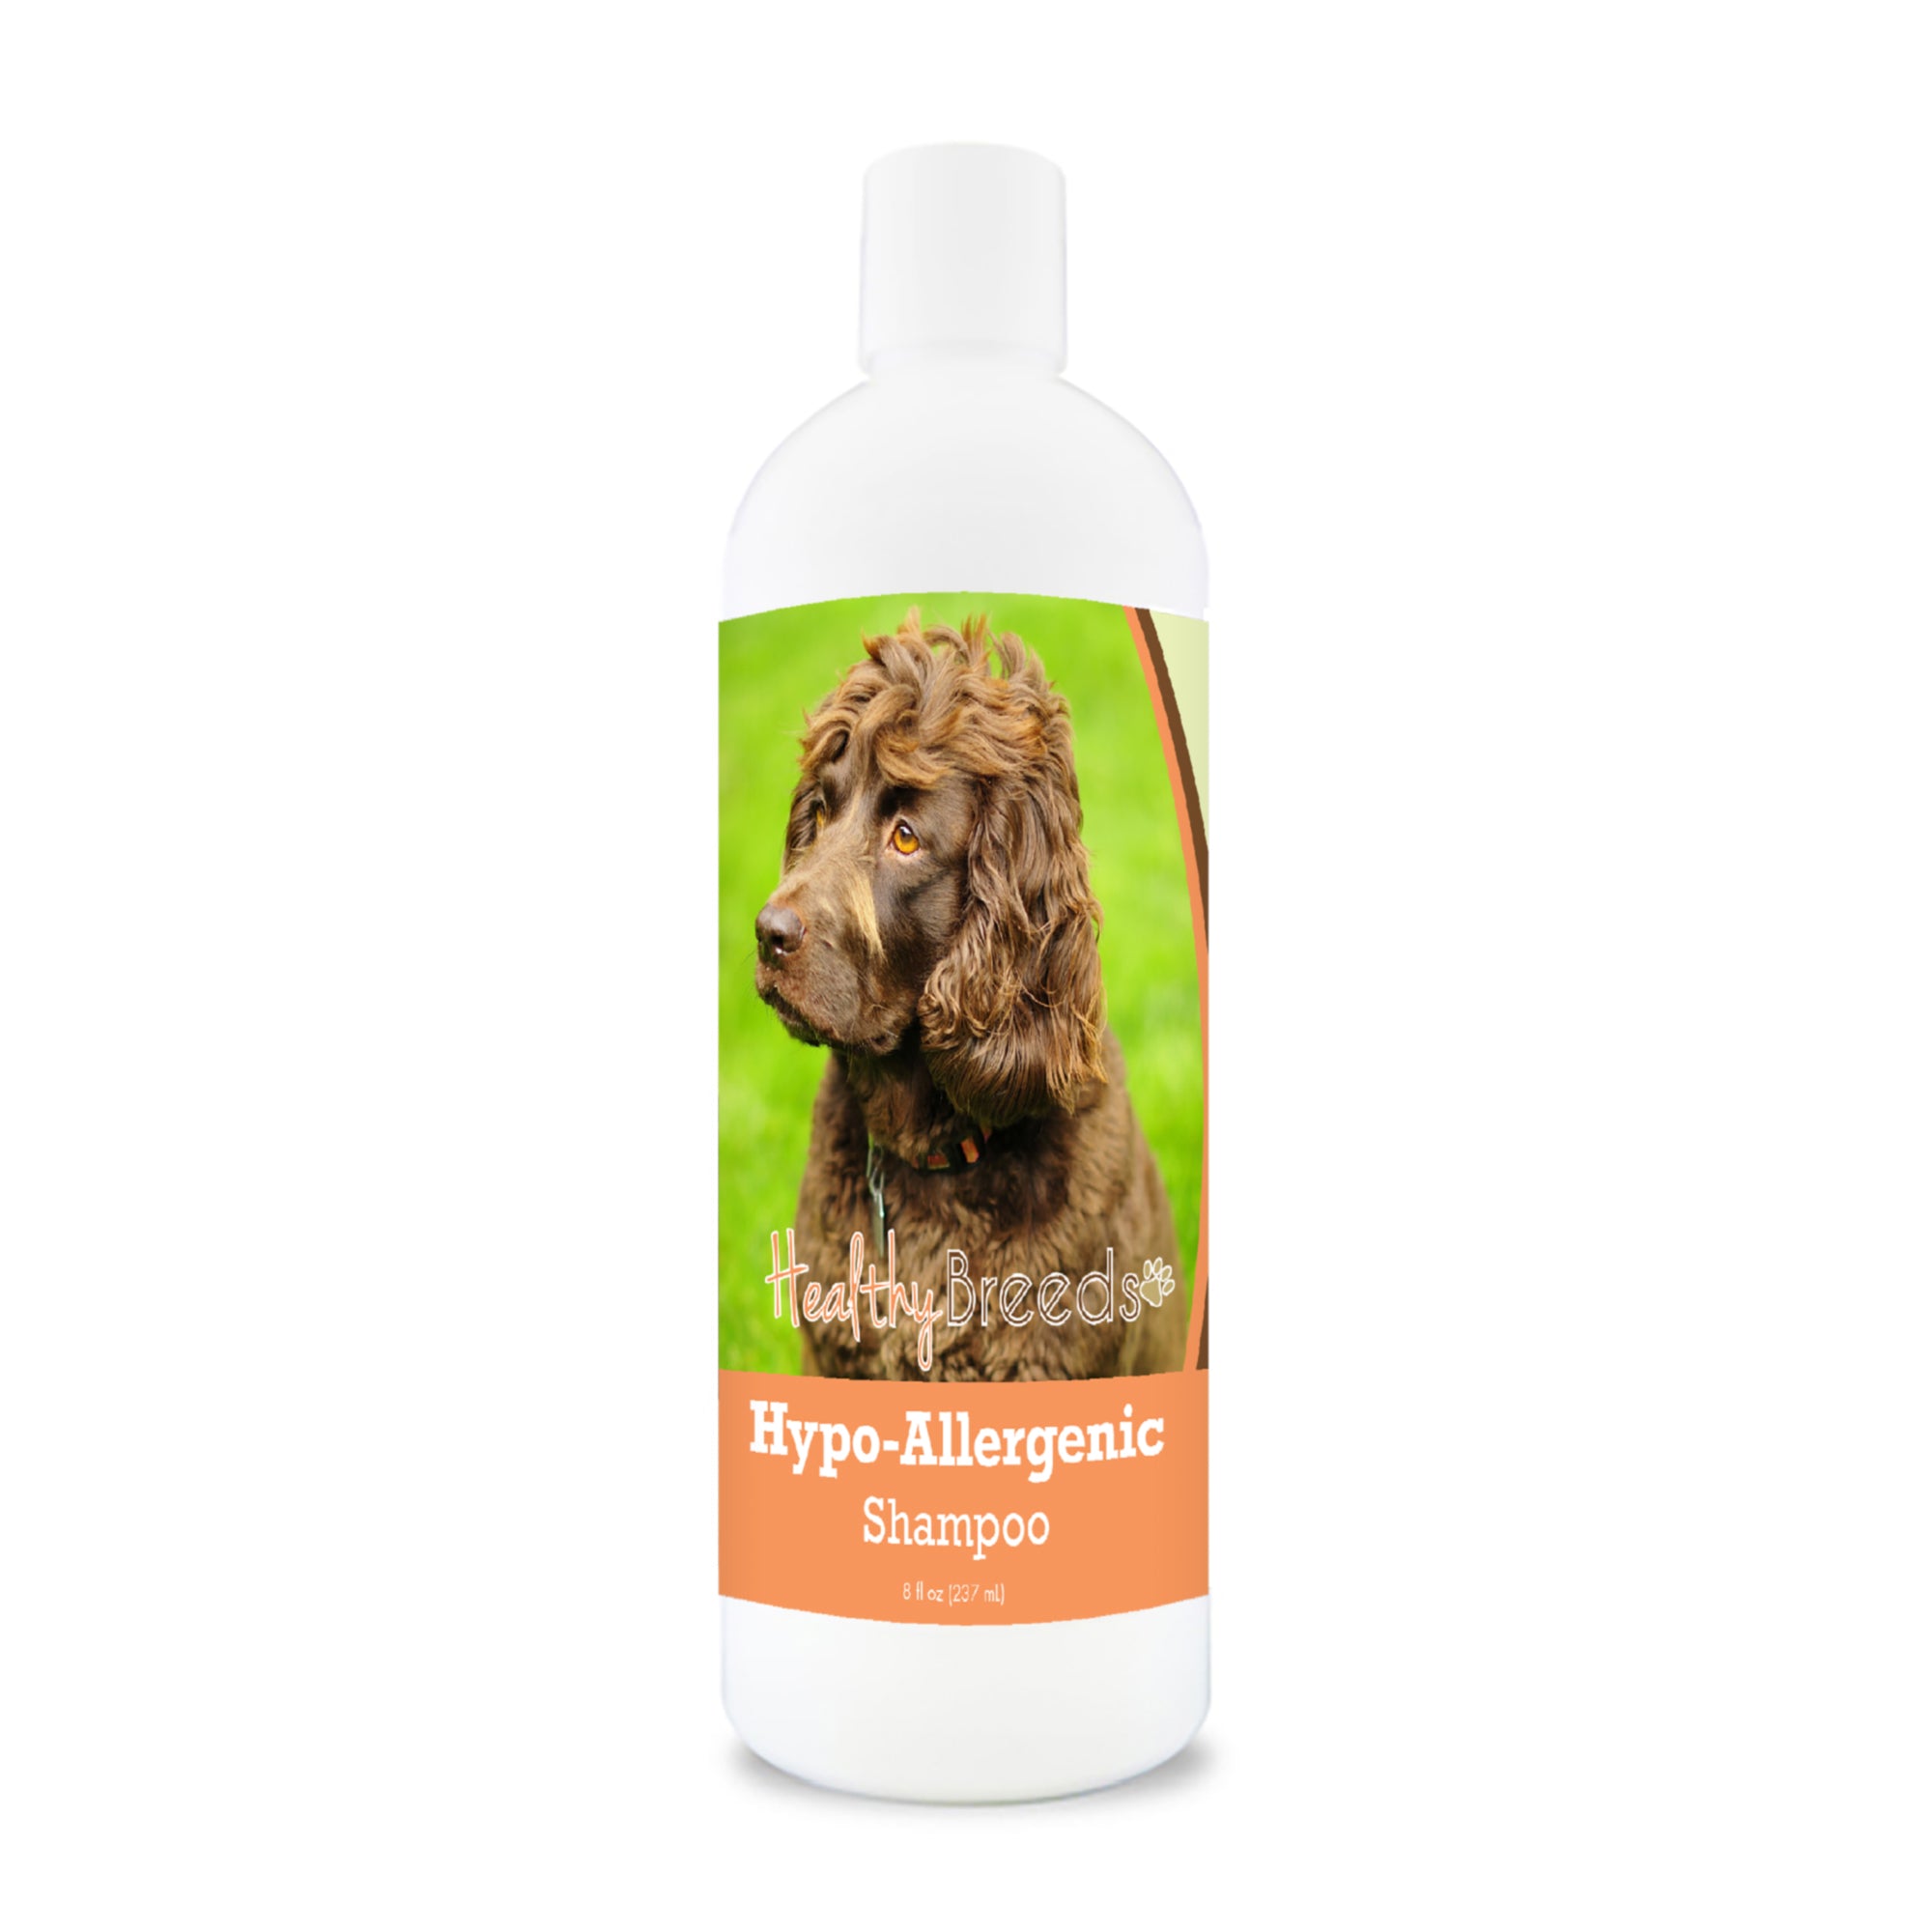 Boykin Spaniel Hypo-Allergenic Shampoo 8 oz